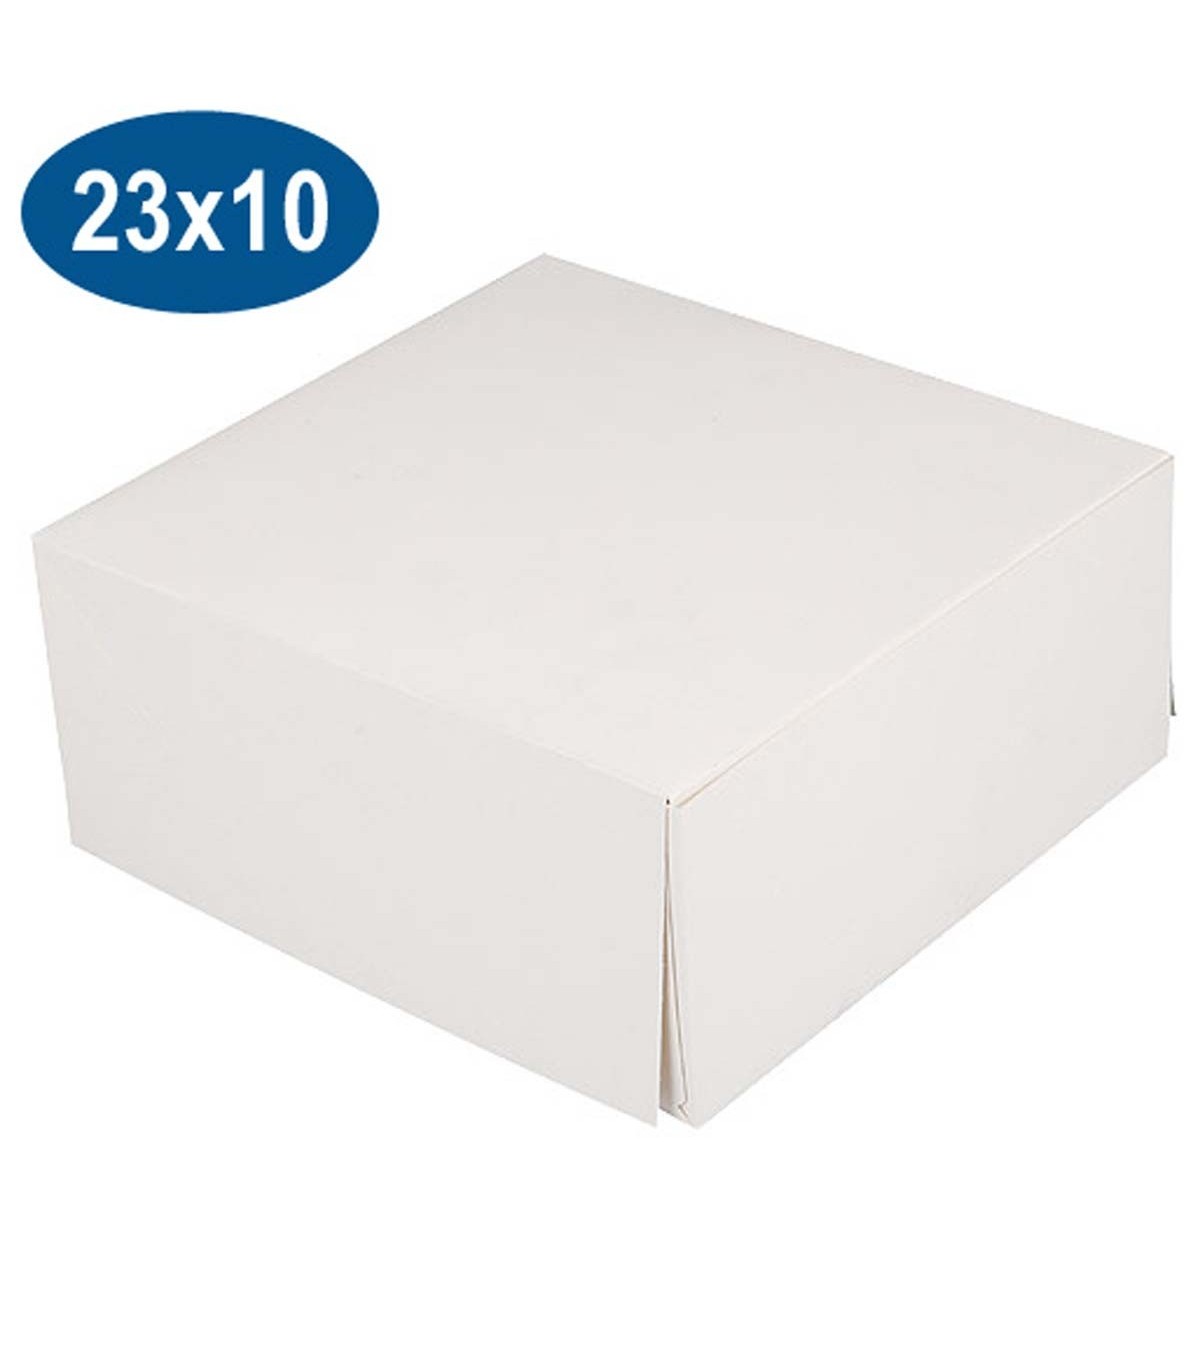 Caja cartón blanca cuadrada con tapa bisagra modelo orleans – Omipack